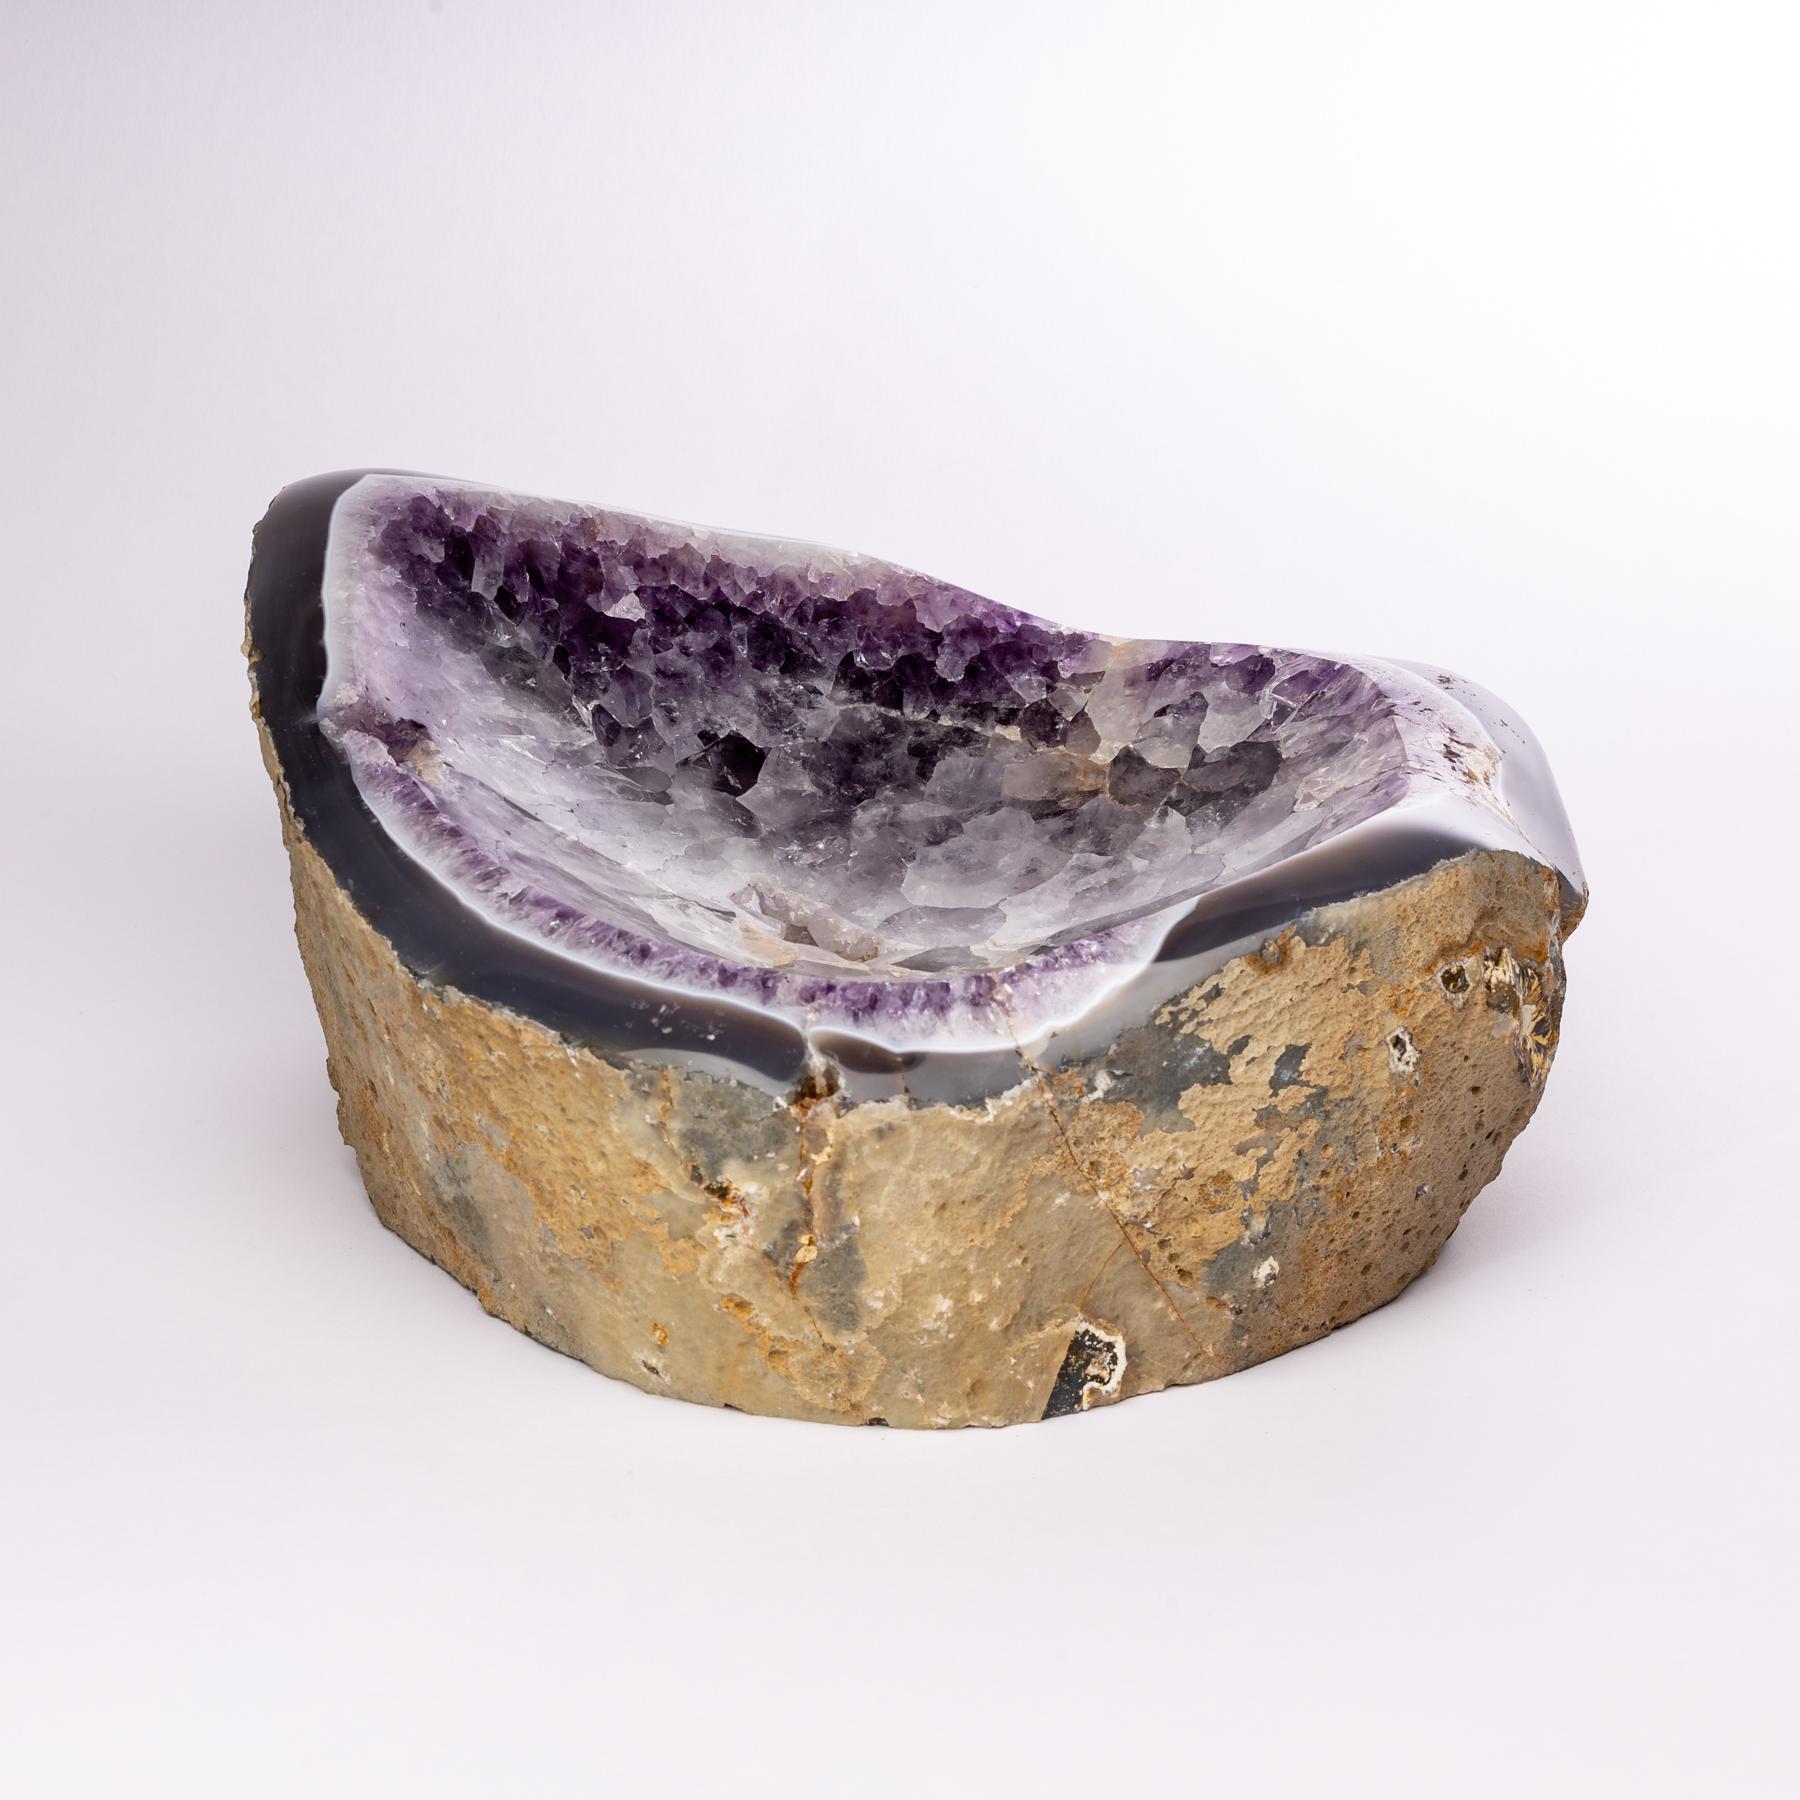 Organic Modern Deep Purple Amethyst Geode Polished Bowl from Madagascar in Organic Shape